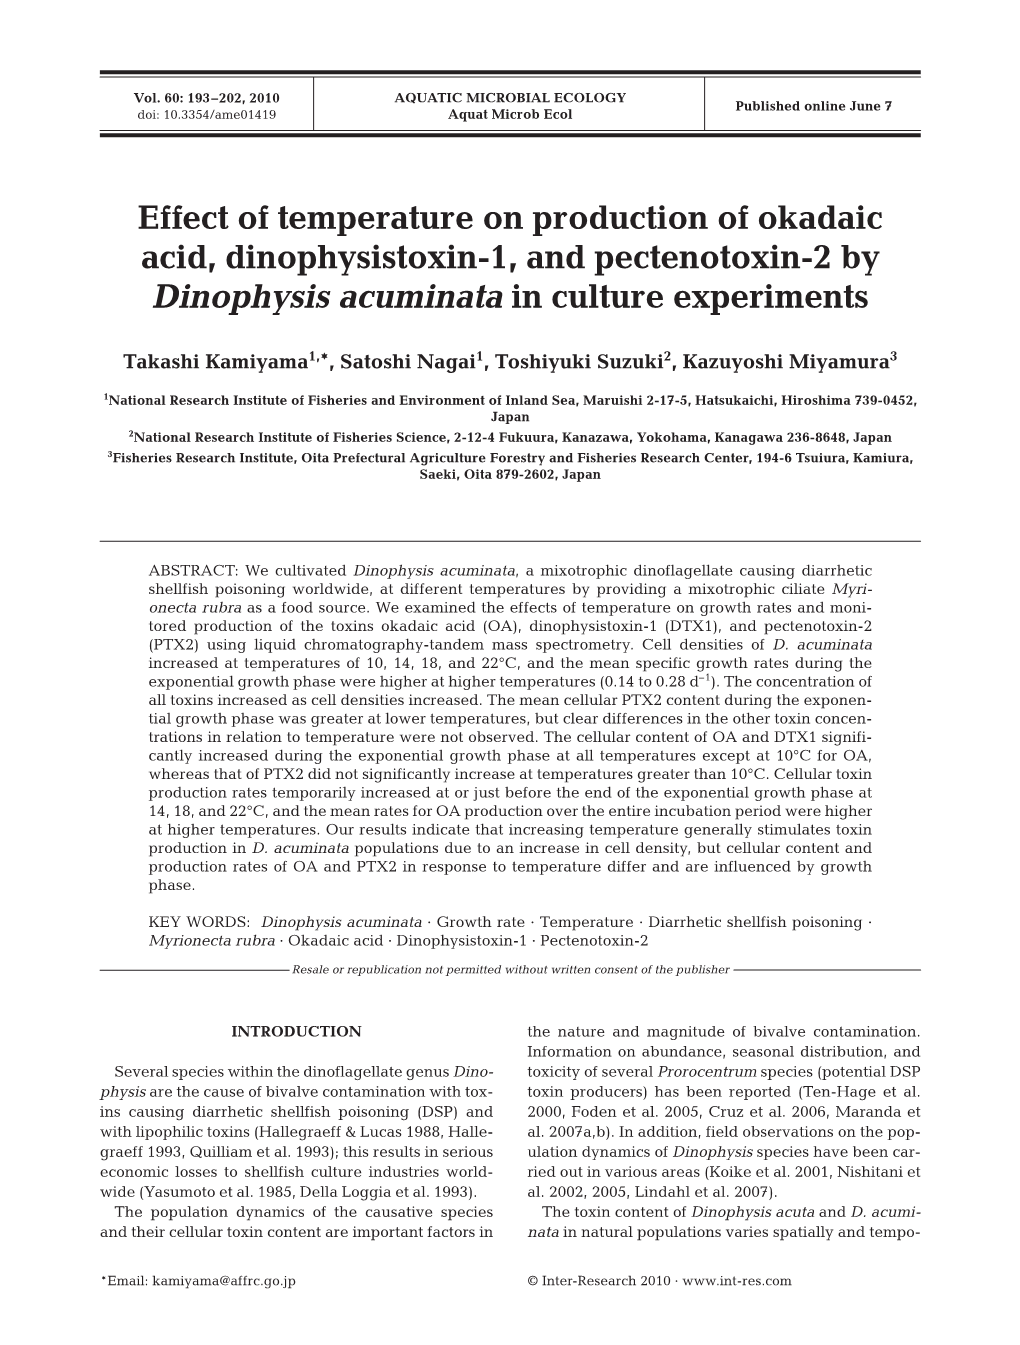 Effect of Temperature on Production of Okadaic Acid, Dinophysistoxin-1, and Pectenotoxin-2 by Dinophysis Acuminata in Culture Experiments